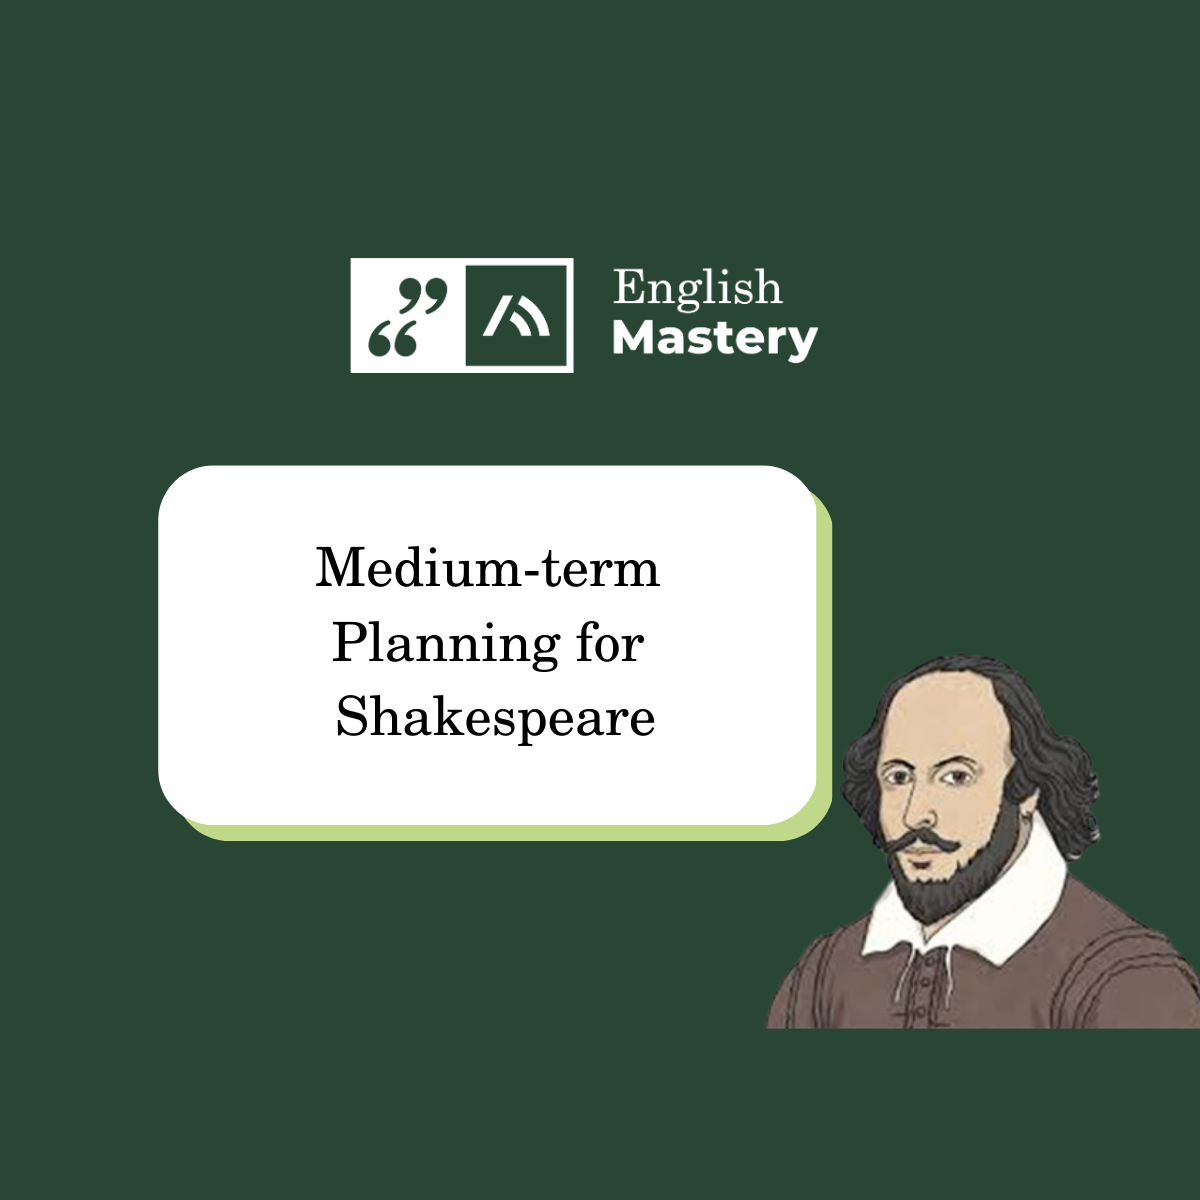 Medium-term Planning for Shakespeare